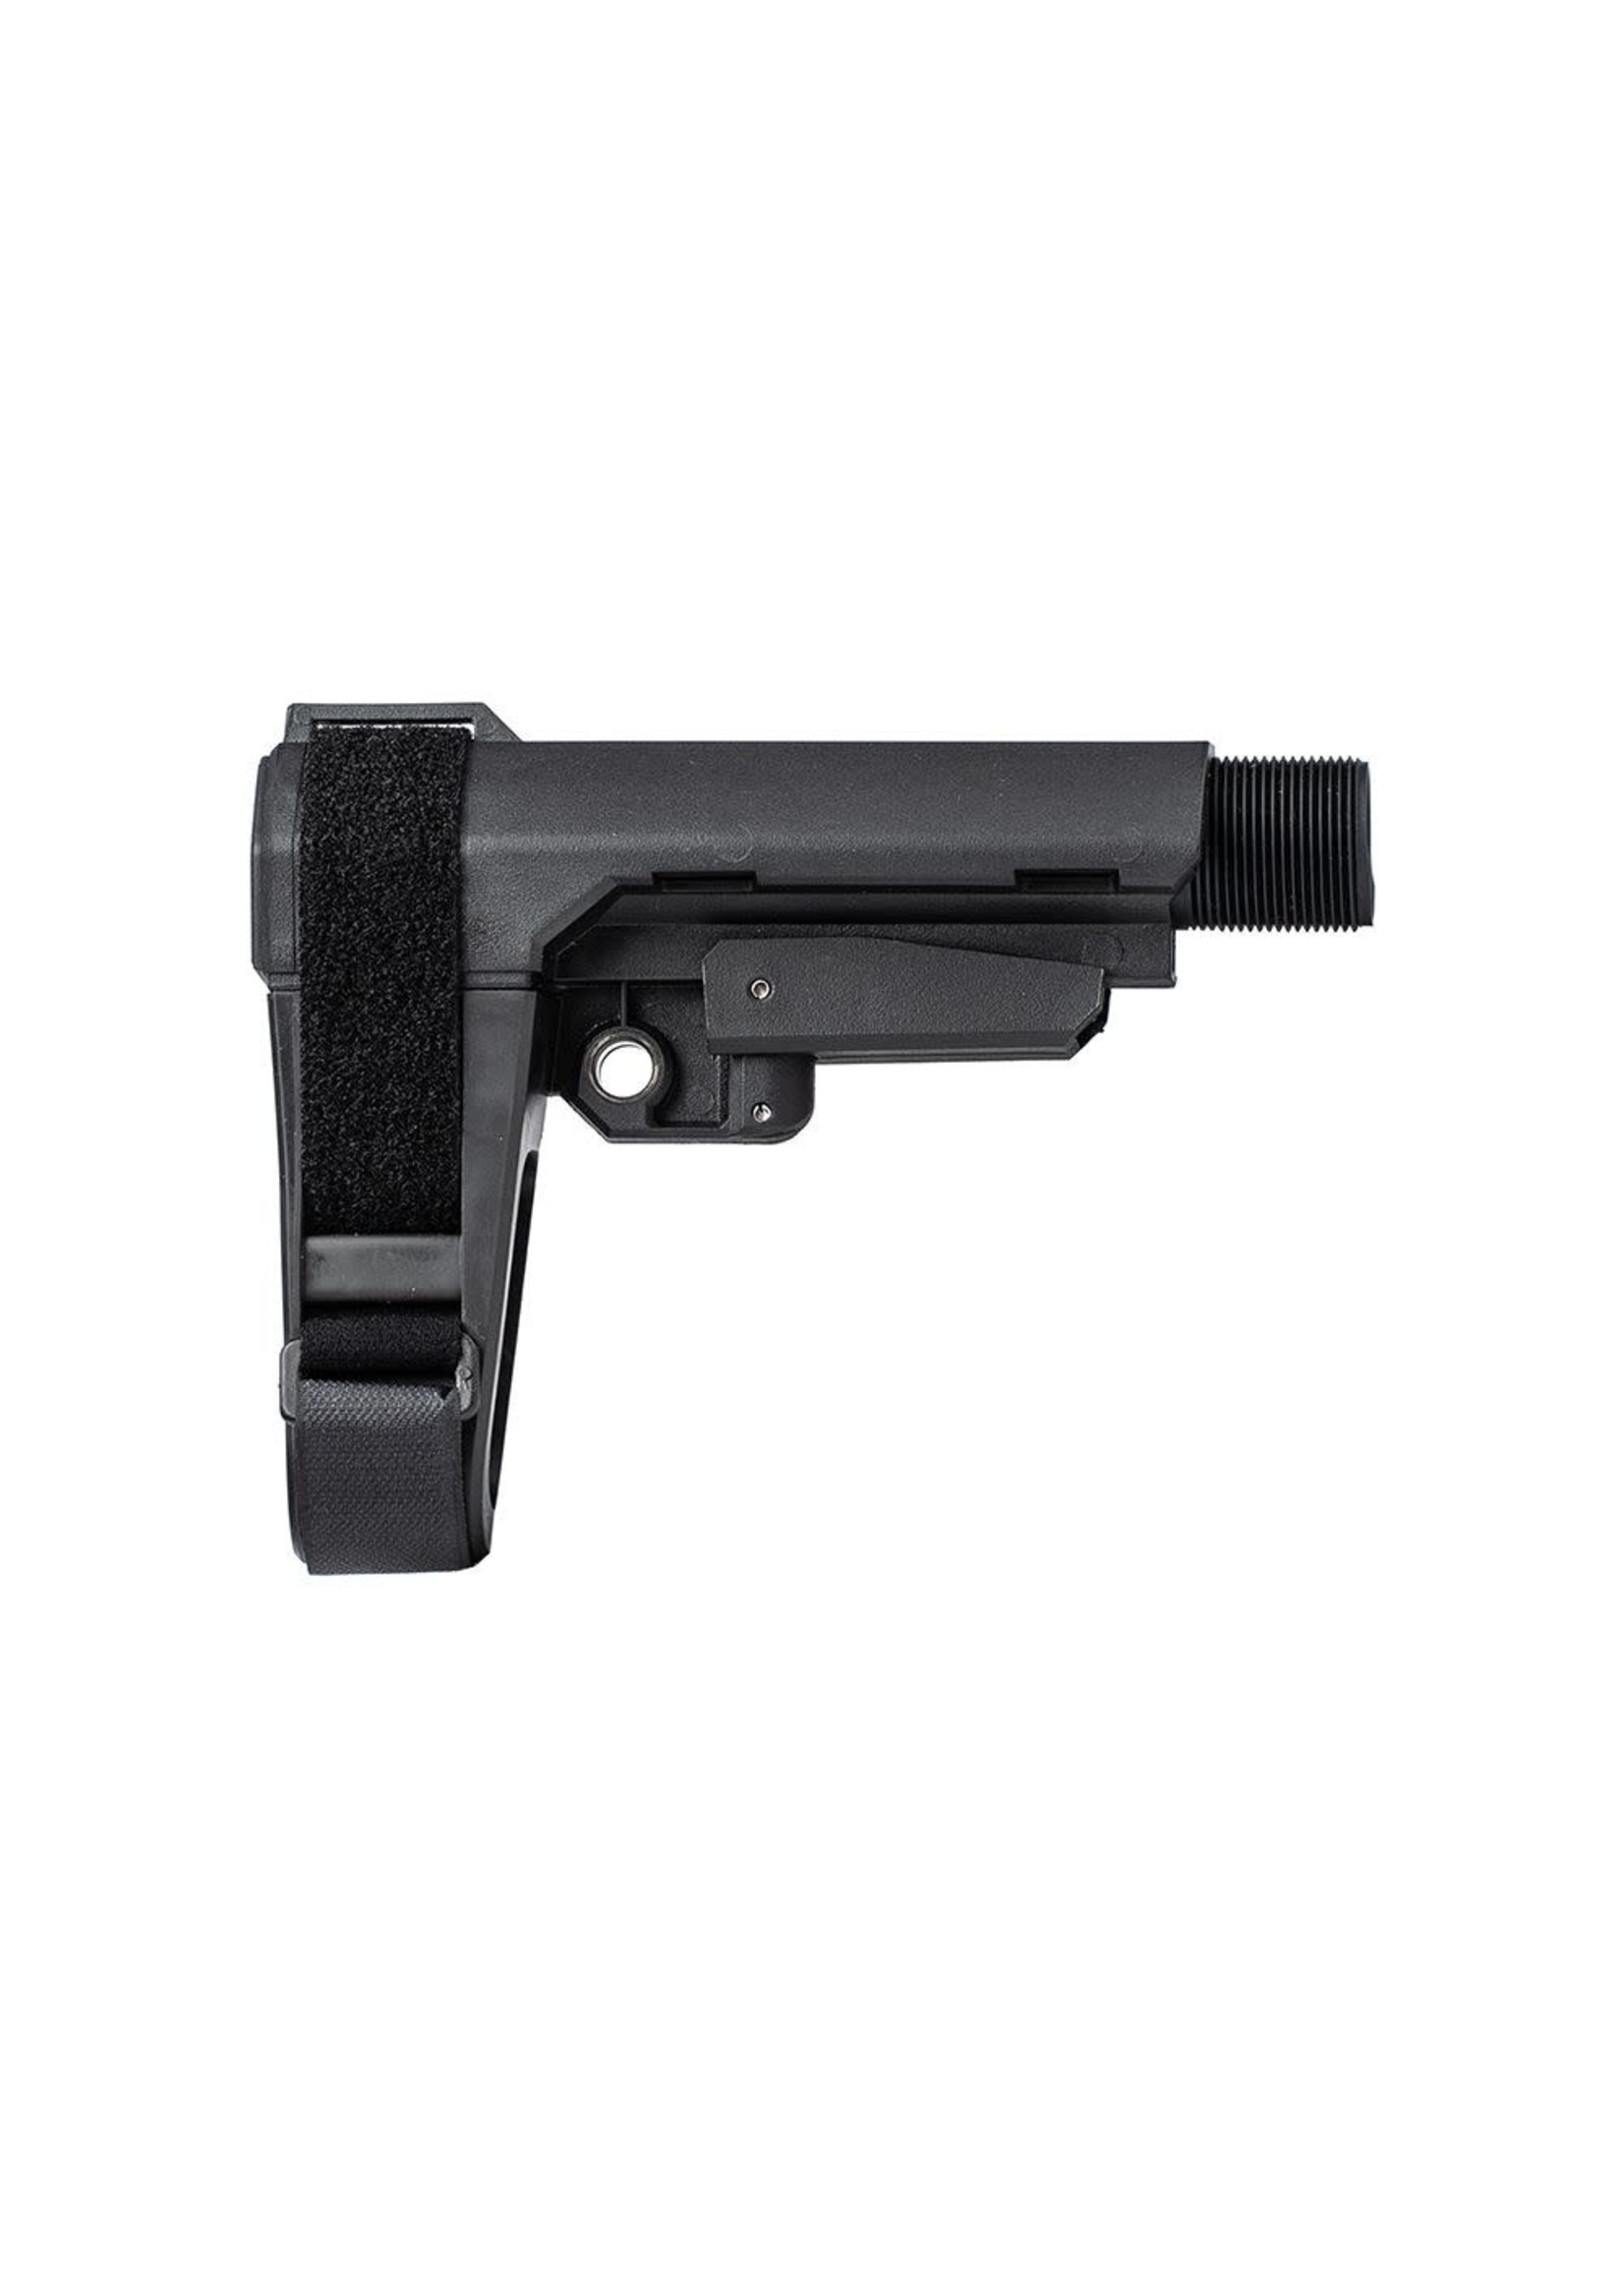 SB Tactical SB Tactical AR Brace SBA3 Pistol Stabilizing Brace w/ Mil-Spec Buffer Tube, black